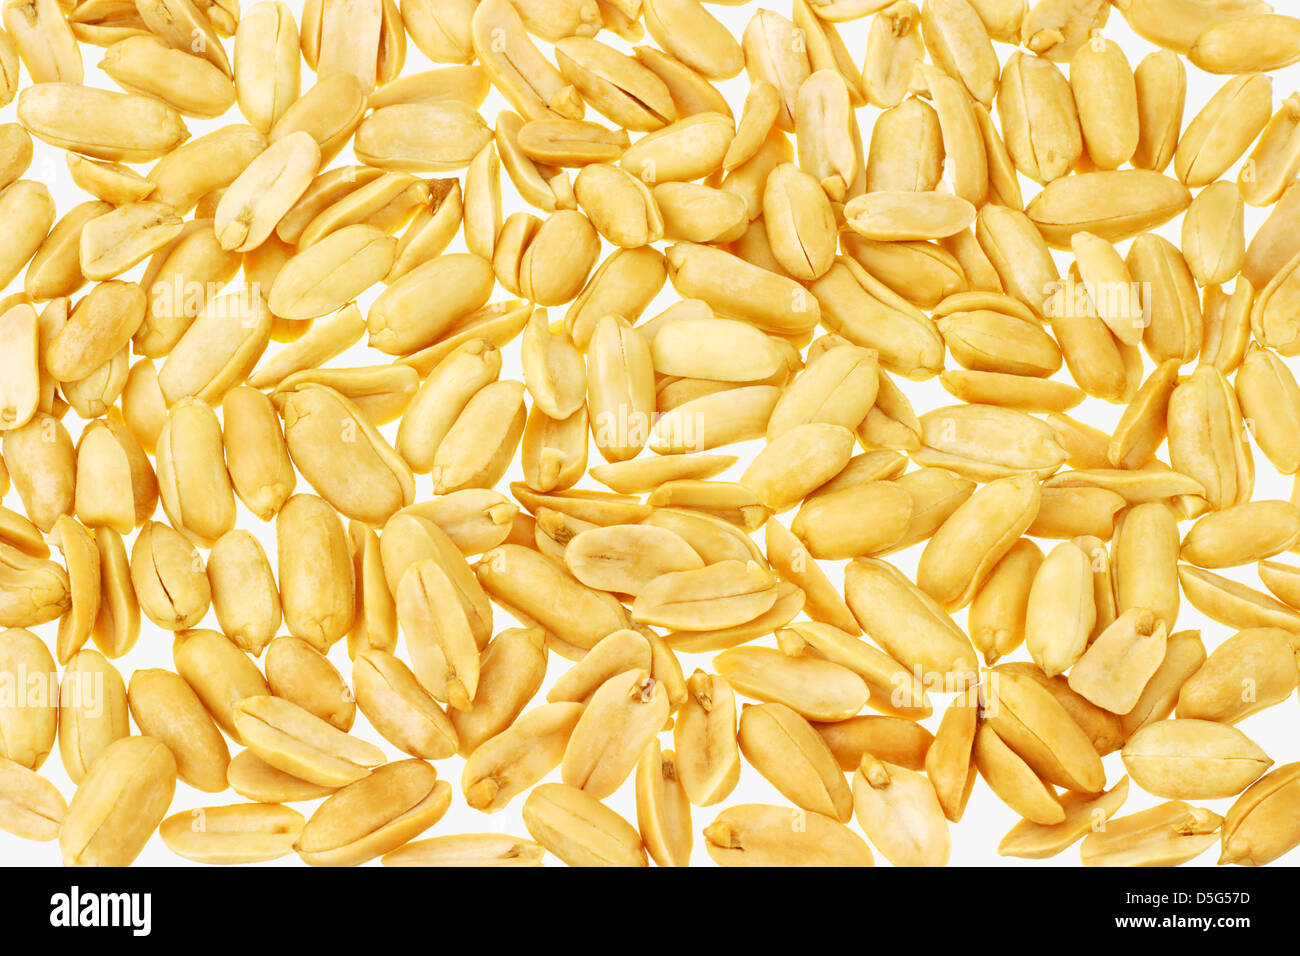 Pea Nuts on White Background Stock Photo - Alamy